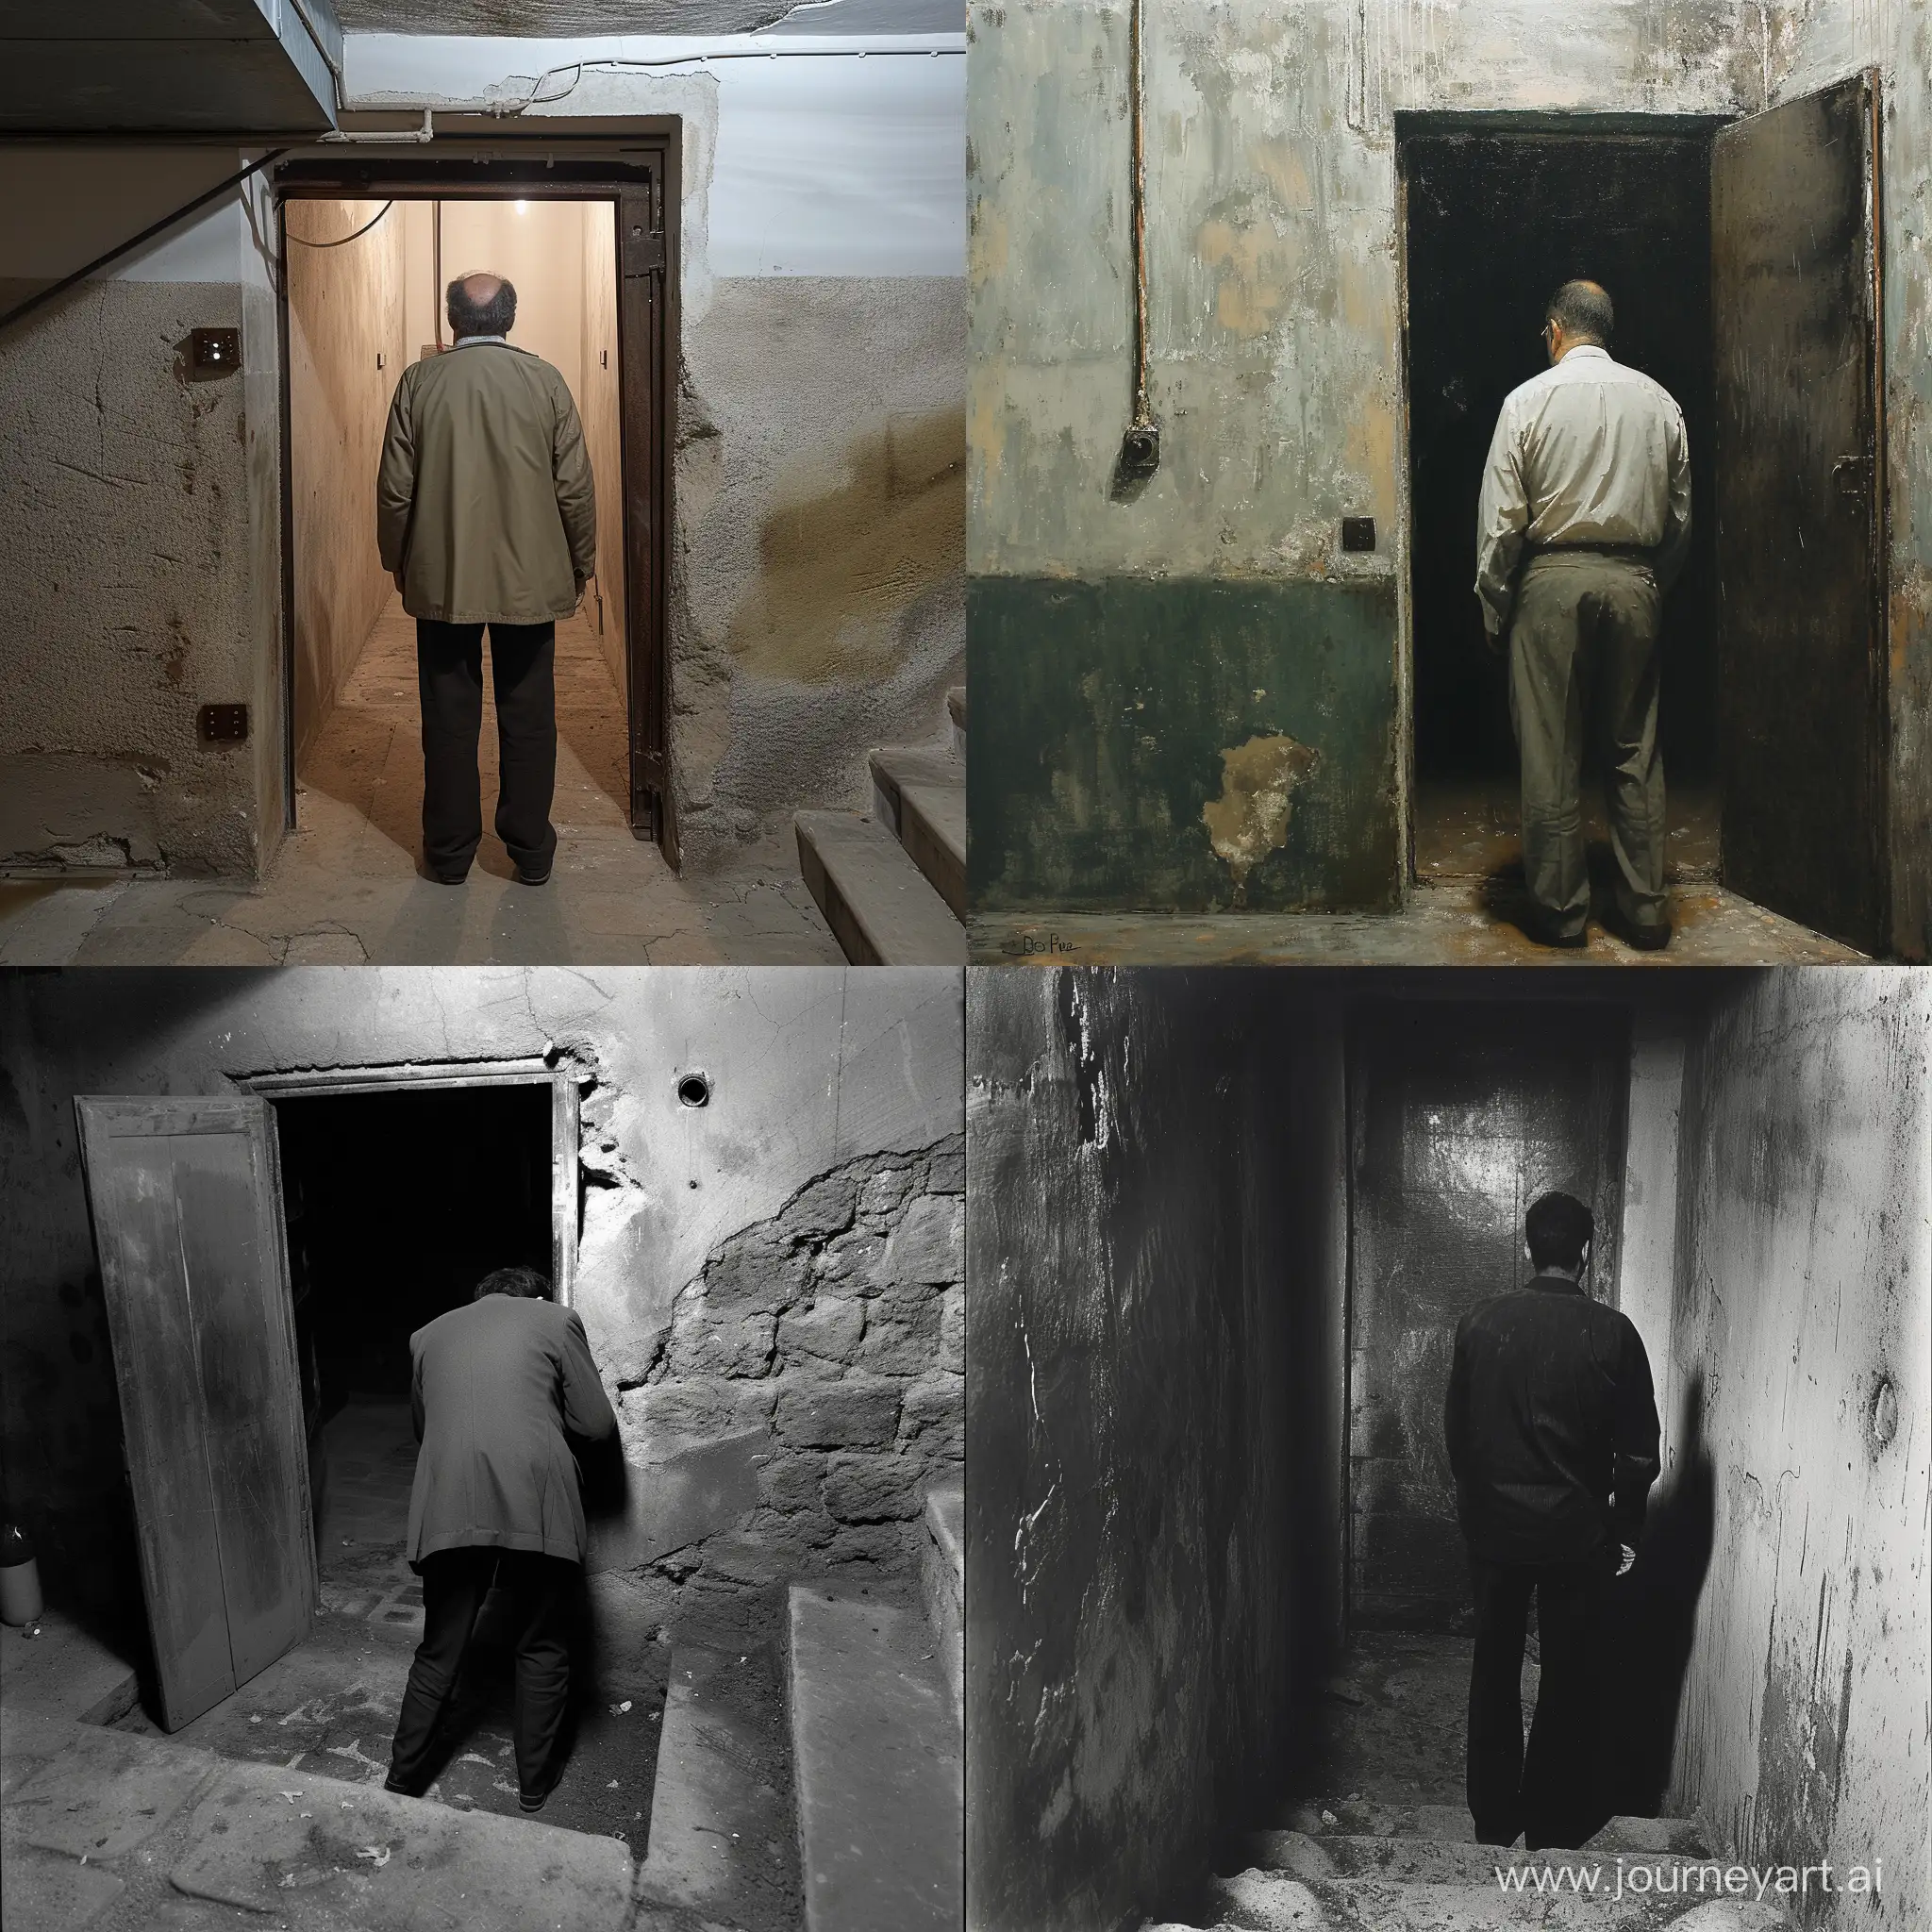 Josep Borrel looks into the basement